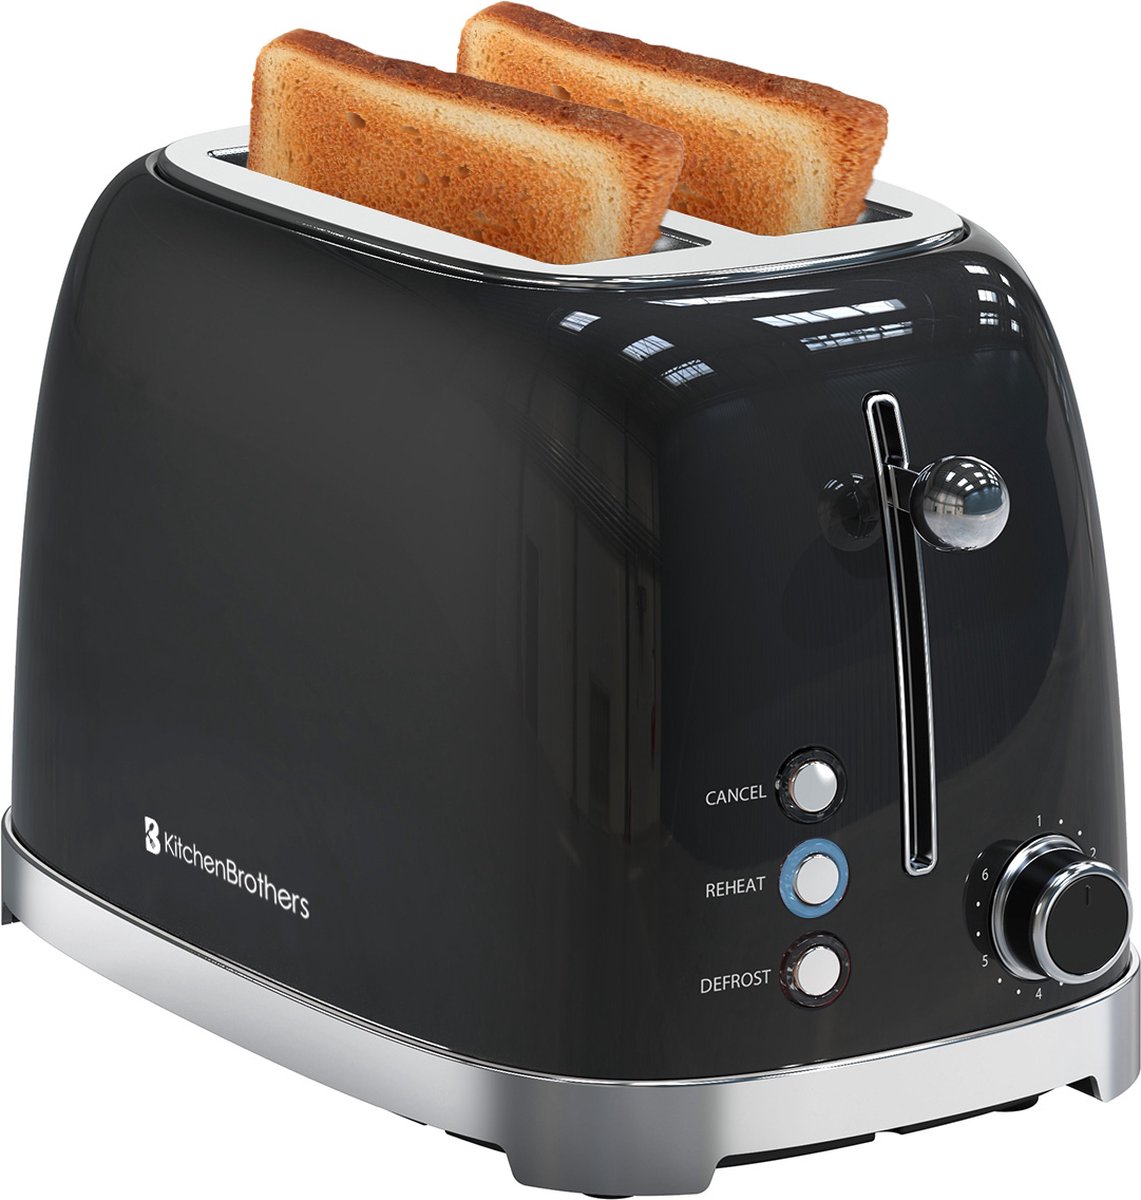 KitchenBrothers Retro Broodrooster - Toaster - 6 Warmteniveaus - 2 Extra Brede Sleuven - 815W - Zwart - KitchenBrothers